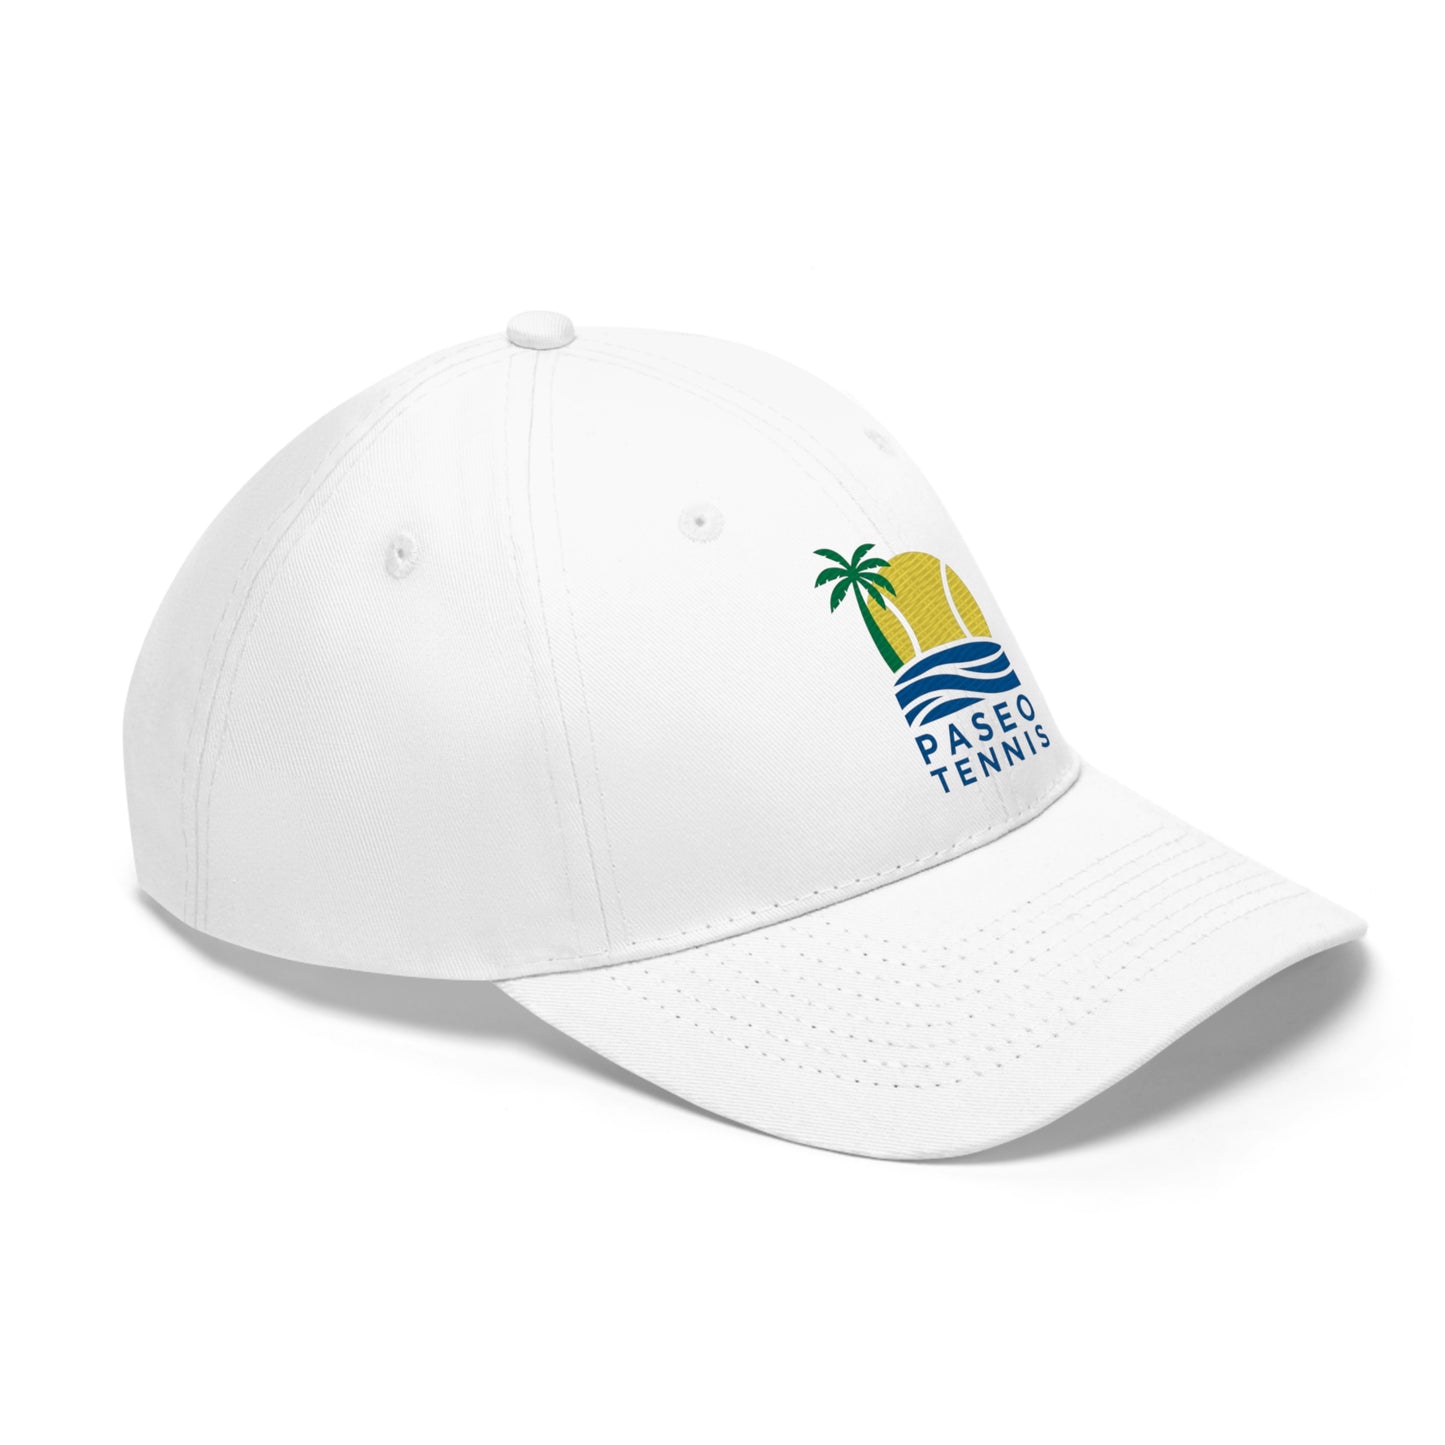 Custom Club name Tennis Hat